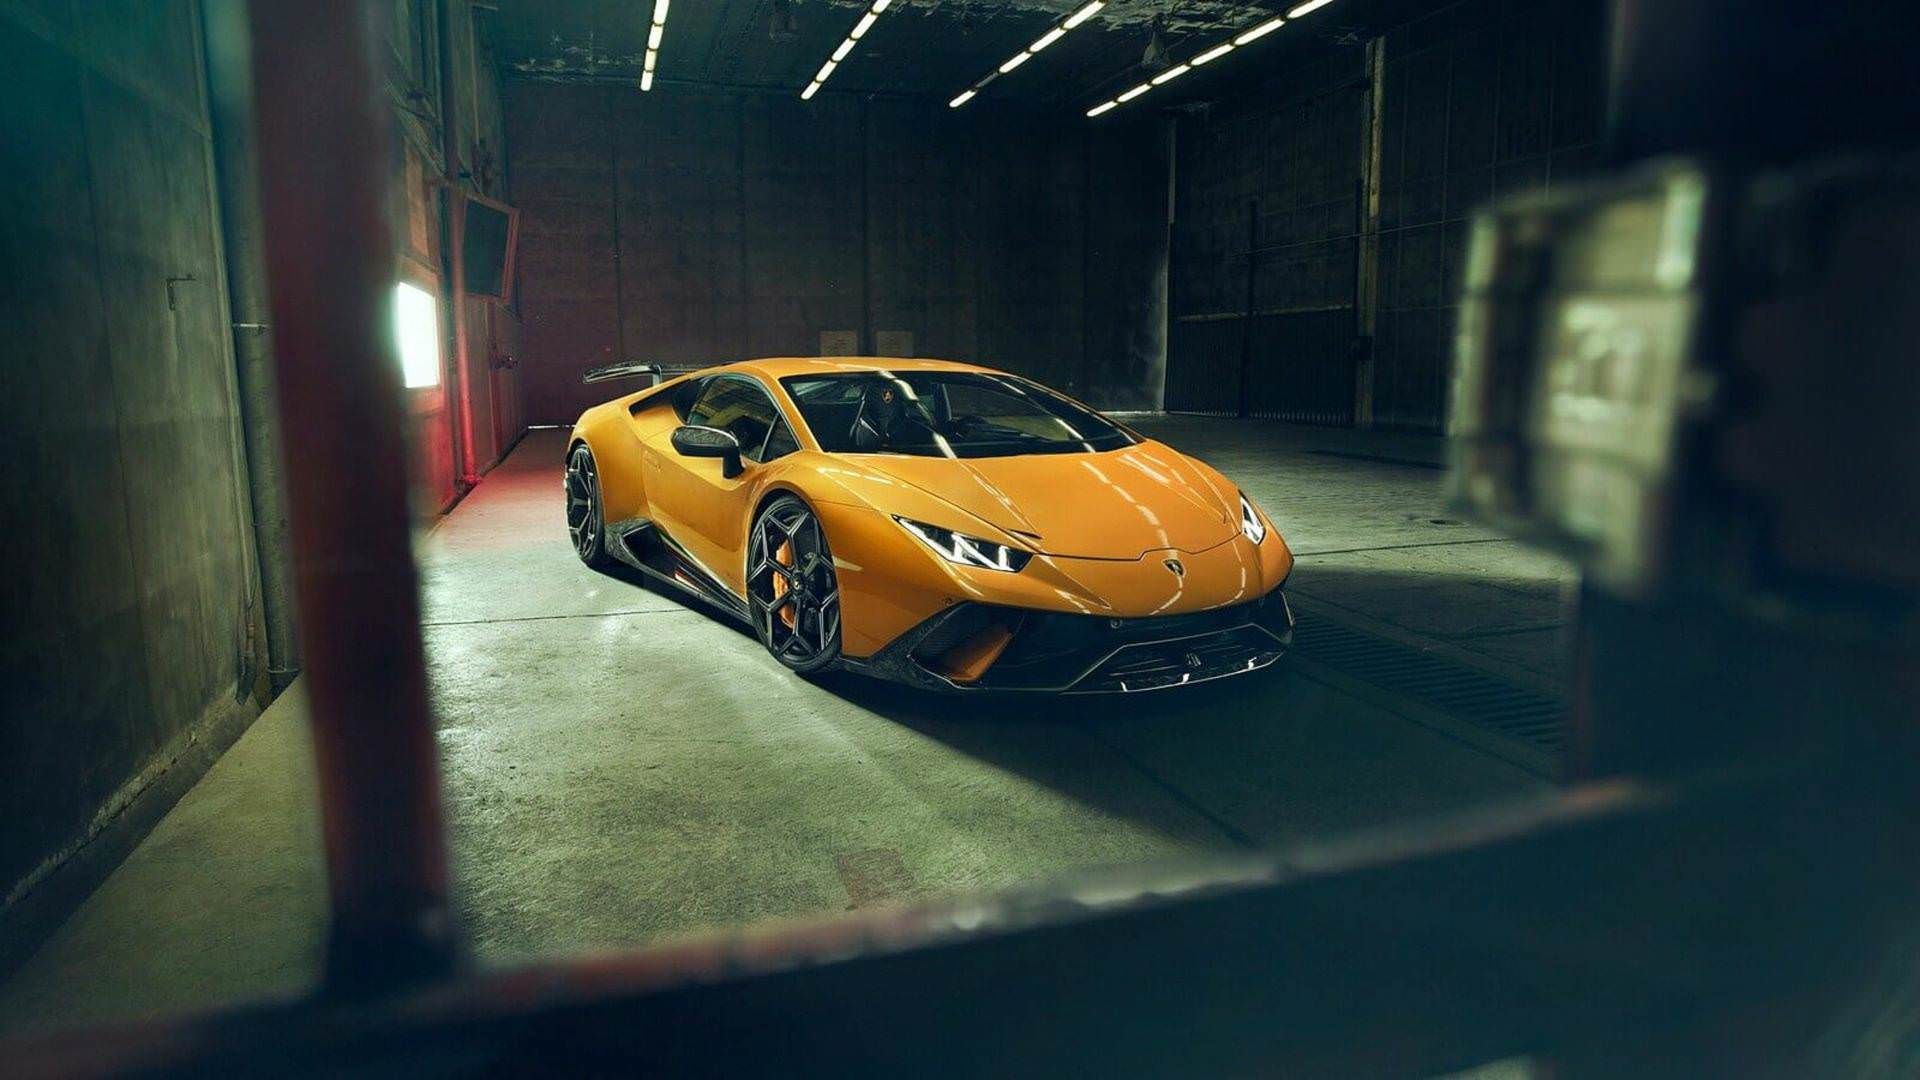 لامبورگینی هوراکان پرفورمانته / Lamborghini Huracan Performante Novitec